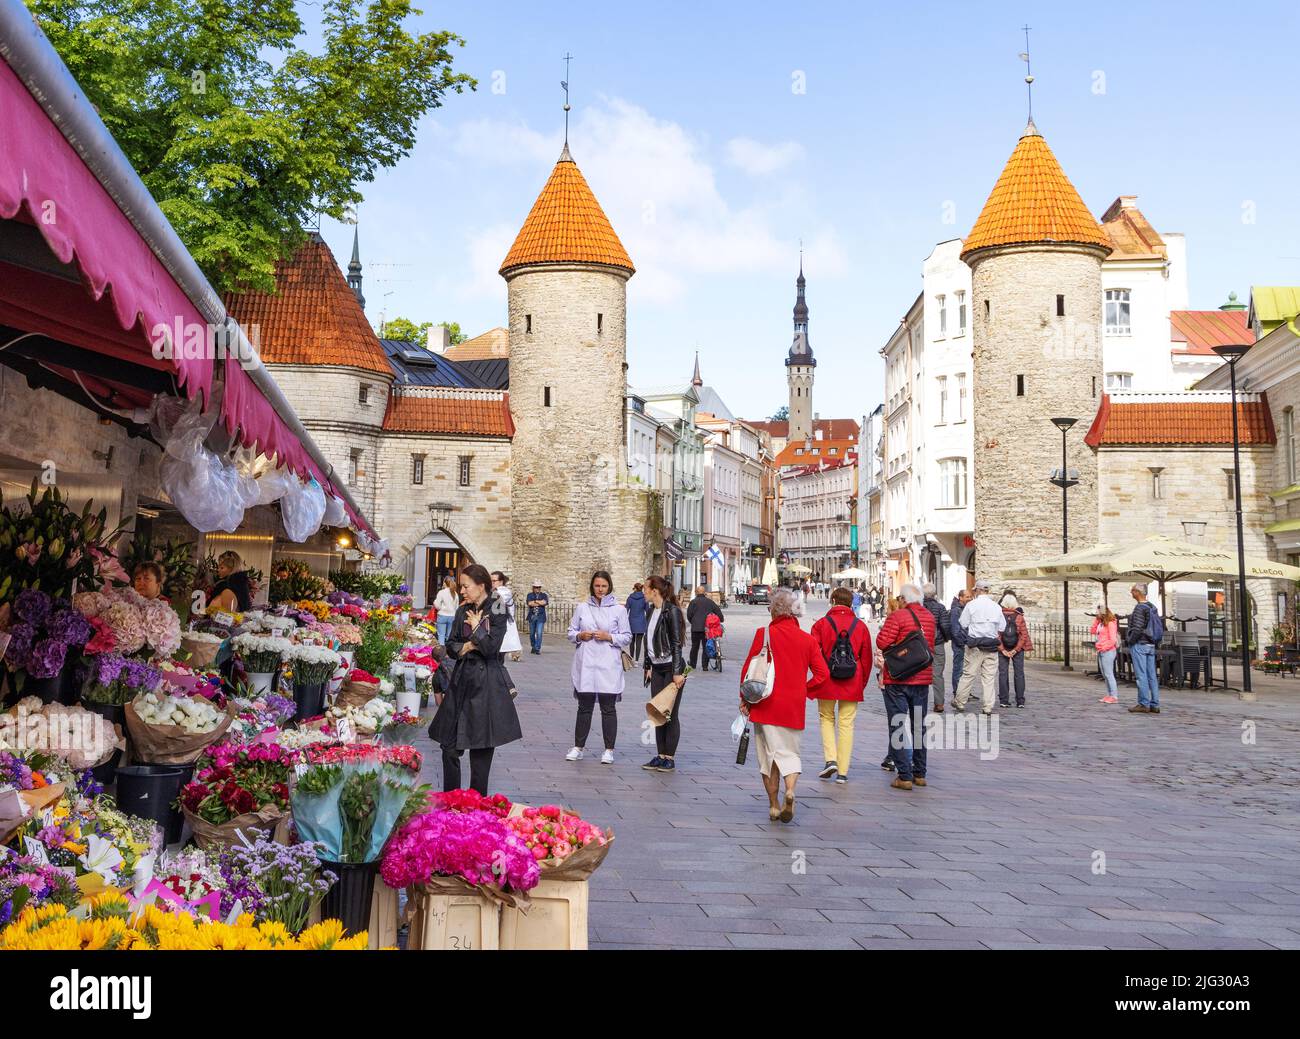 Estonia travel; Tallinn Old Town; the Viru Gate, part of the 14th century medieval city walls, and the flower market, Tallinn Estonia Europe Stock Photo